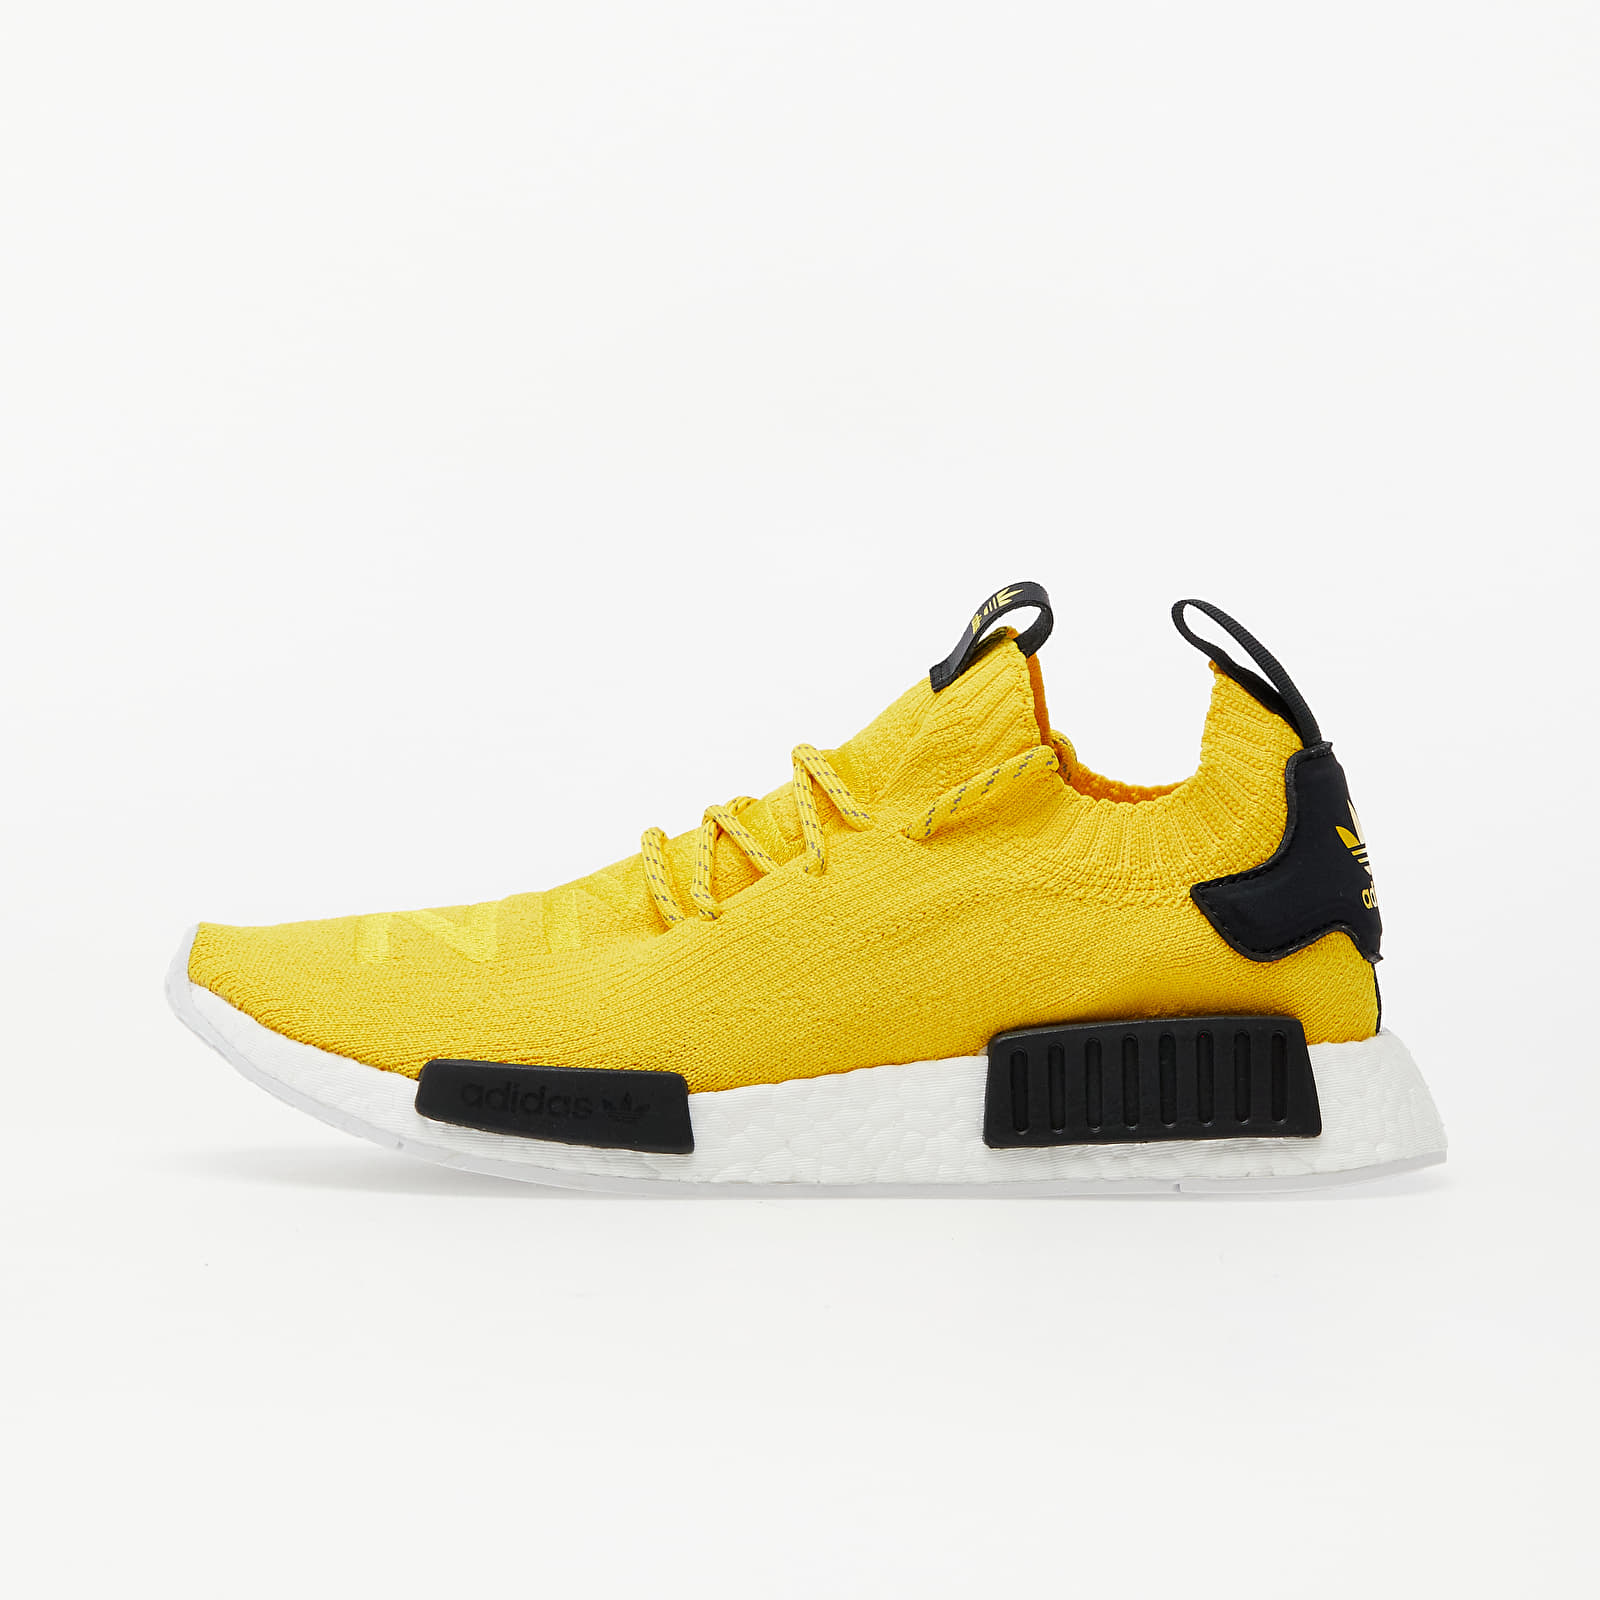 Men's shoes adidas NMD_R1 Primeknit Eqt Yellow/ Eqt Yellow/ Core Black